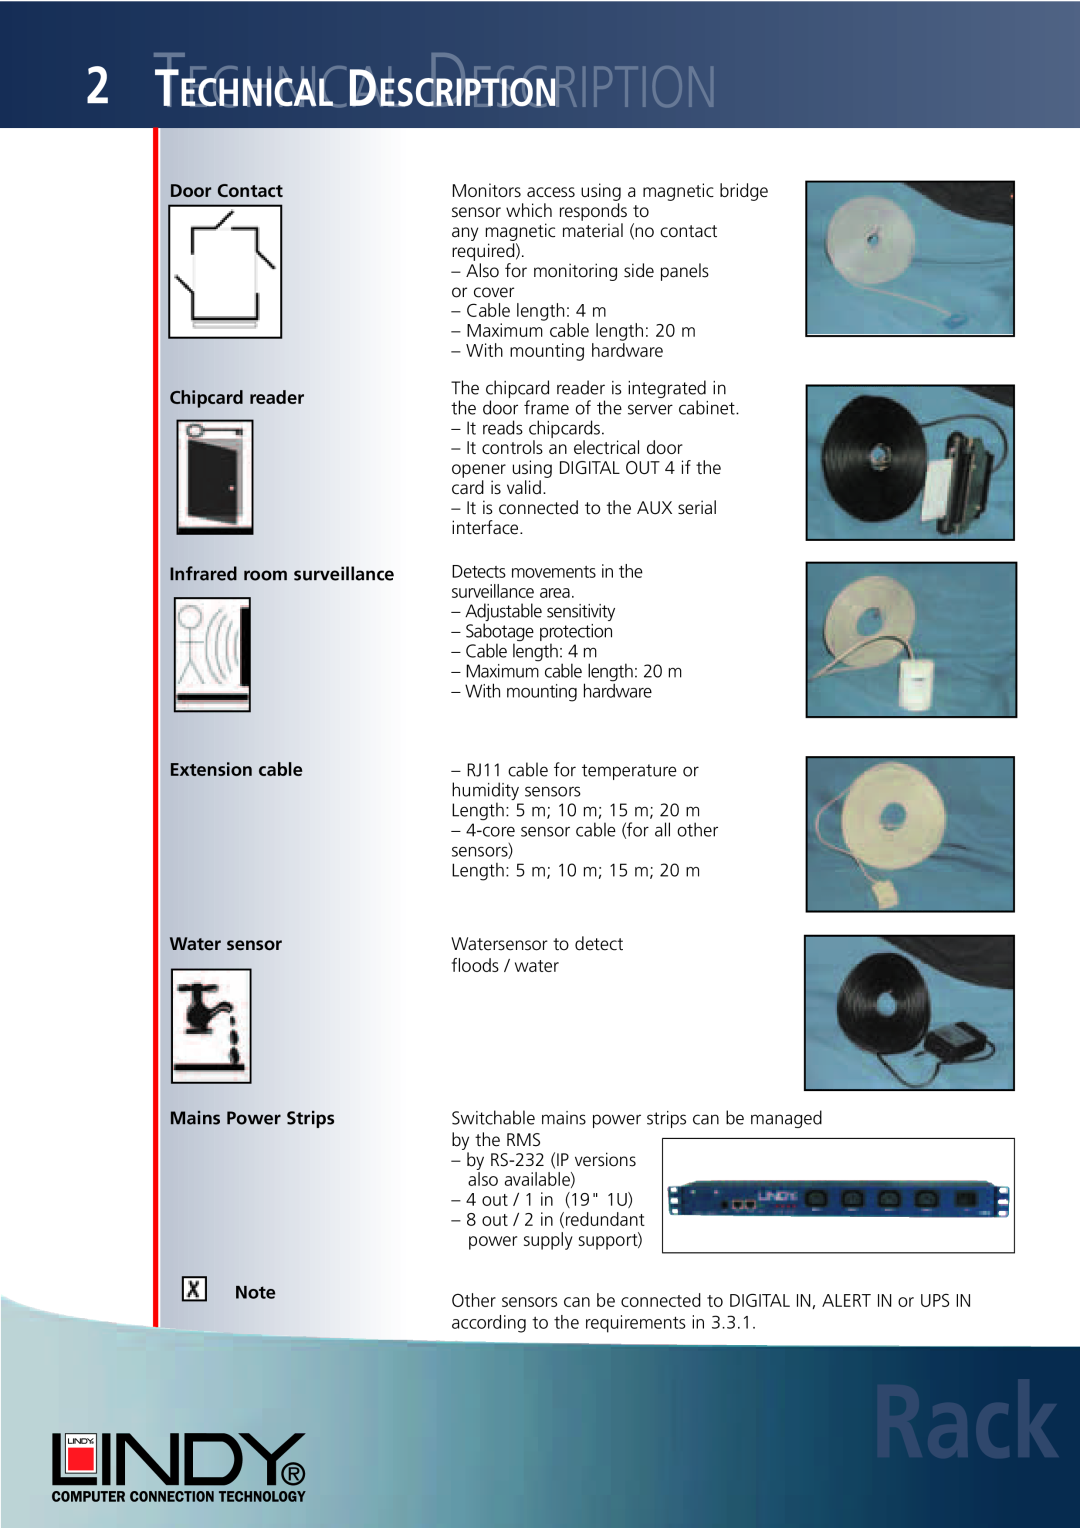 Lindy Carbon Monoxide Alarm Rack, Ttechnicalechnicaldescriptiondescription, Door Contact, reader, Infrared, cable, Water 